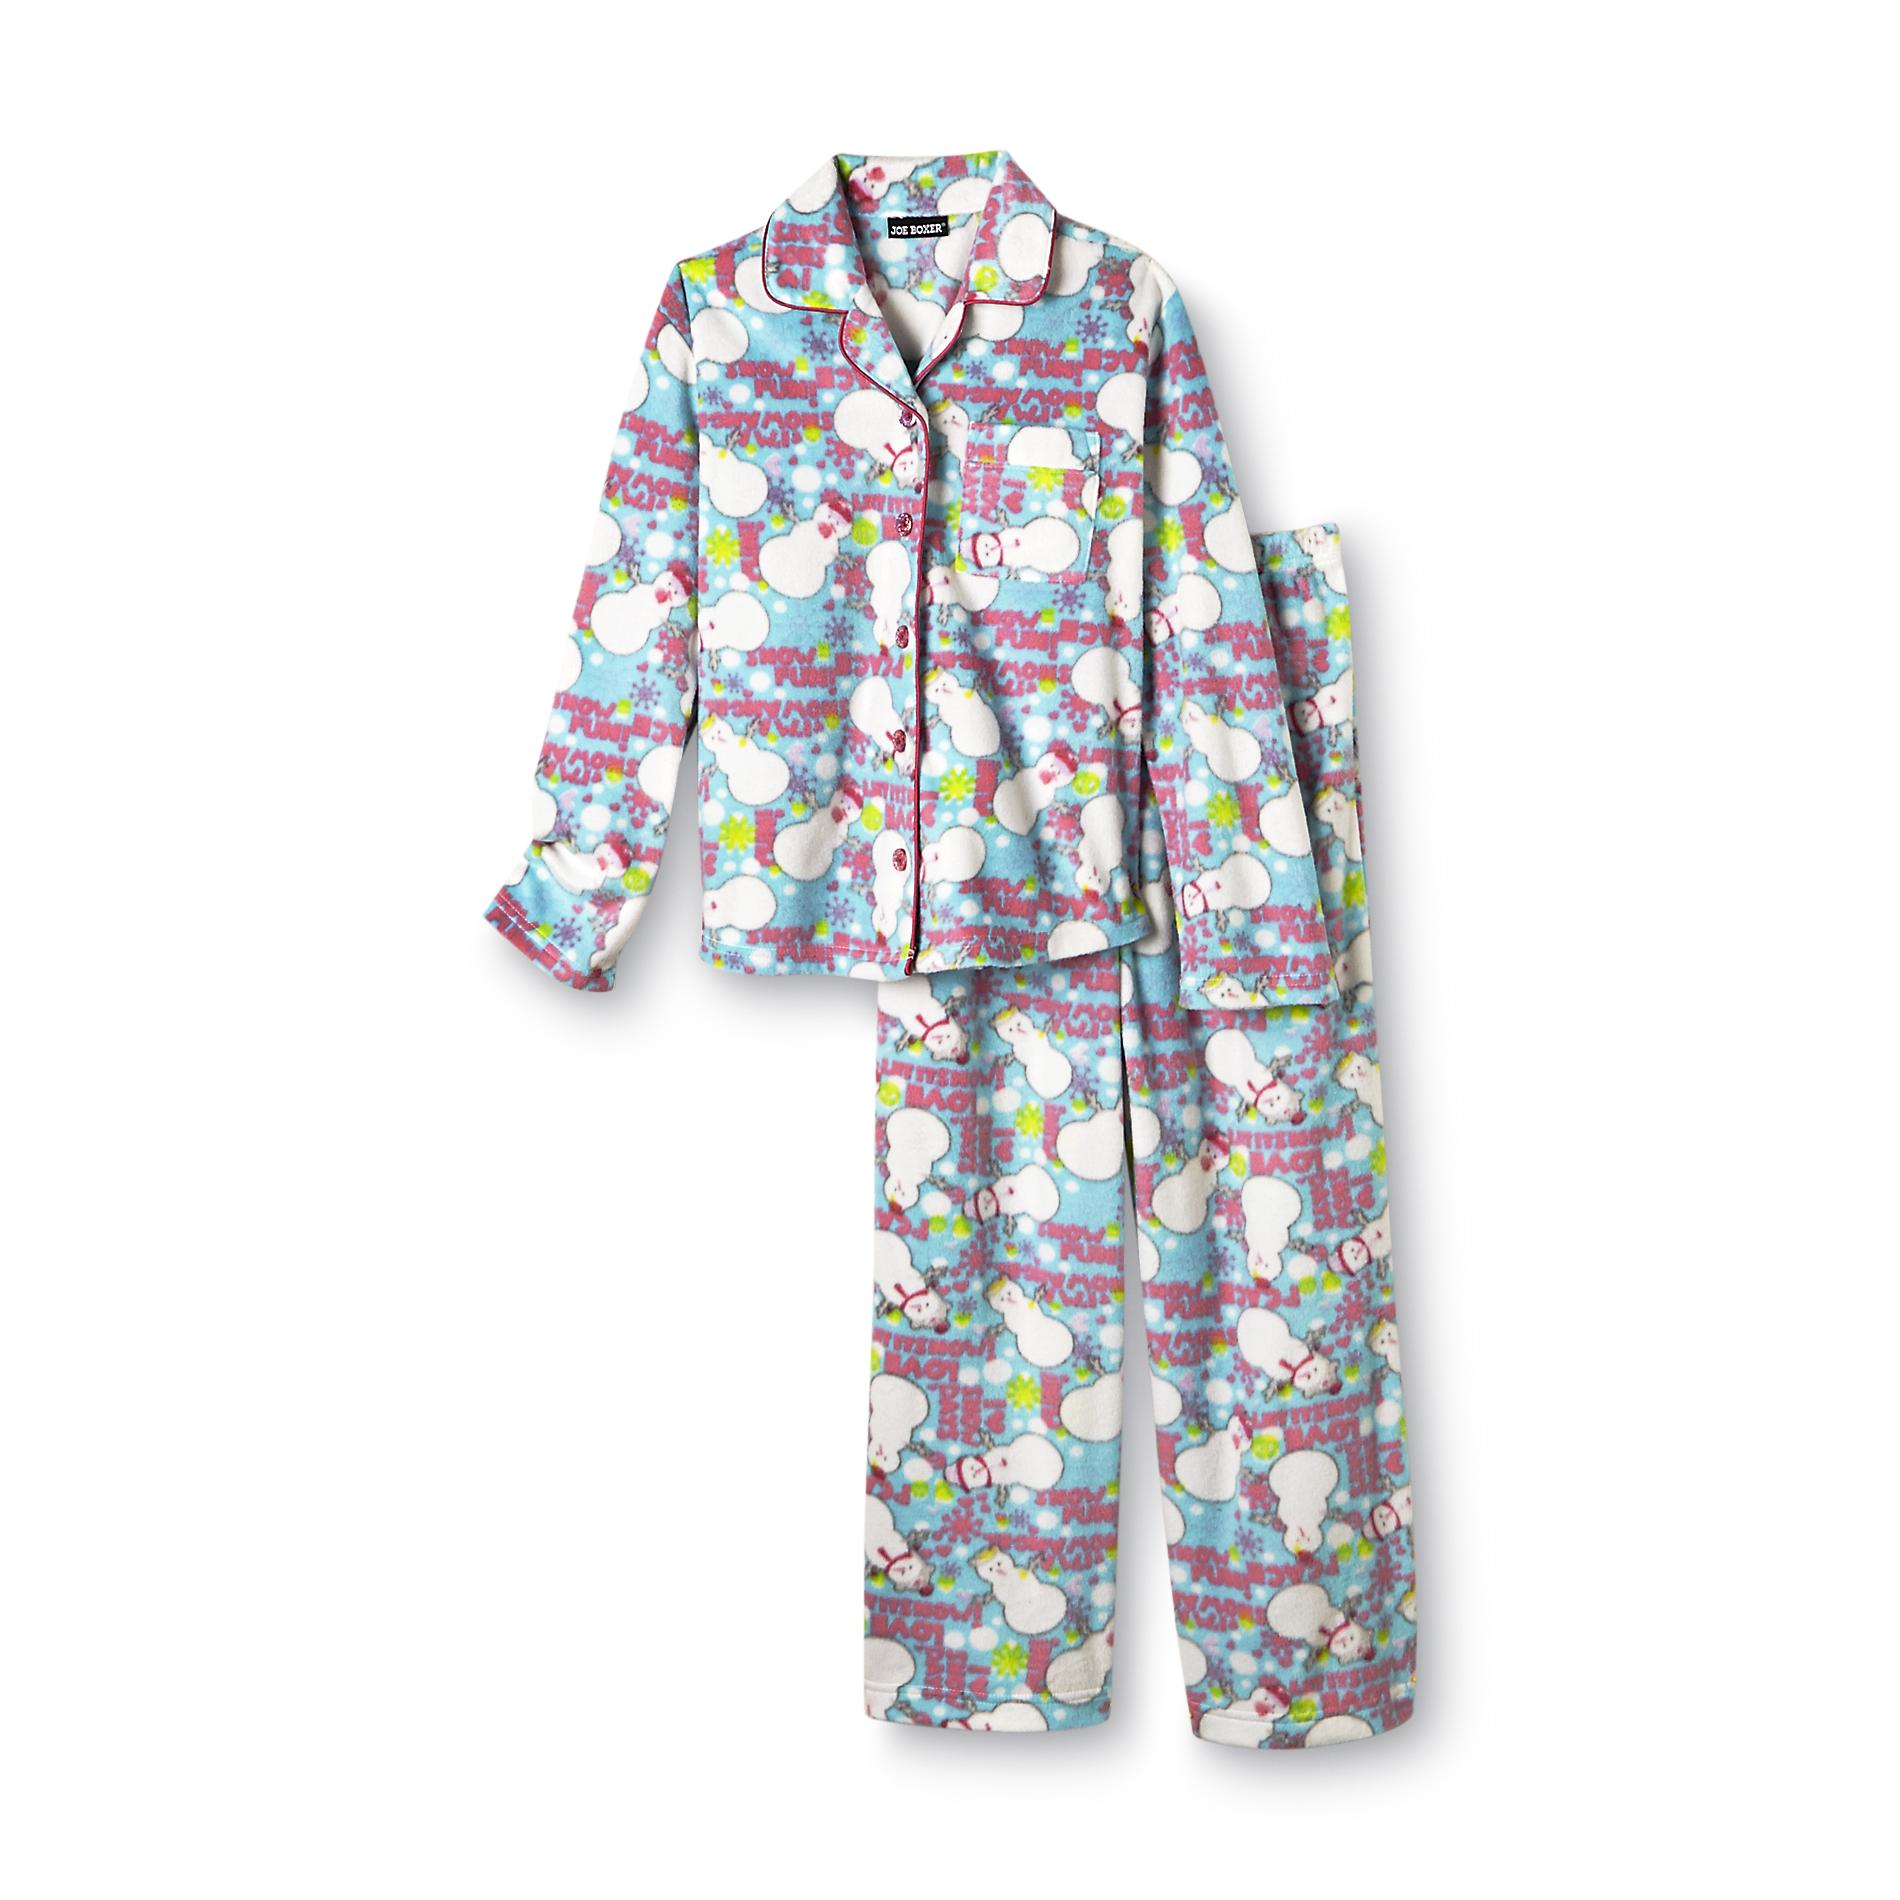 Joe Boxer Girl's Fleece Pajama Set - Snowman